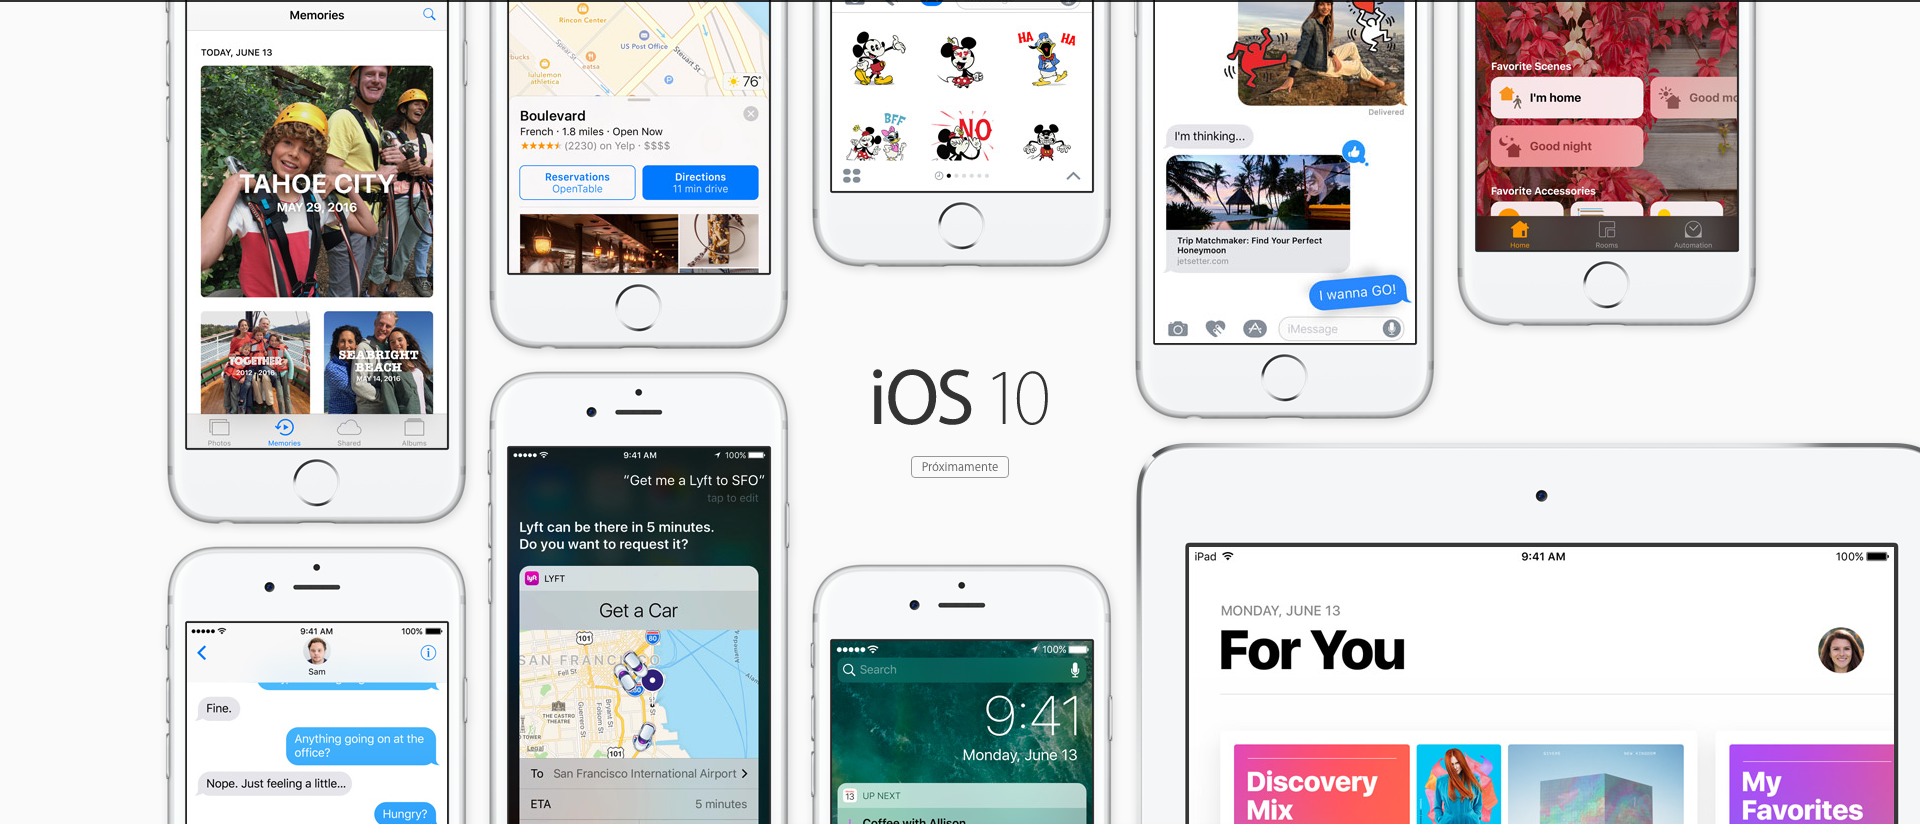 apple beta ios 10 profile download